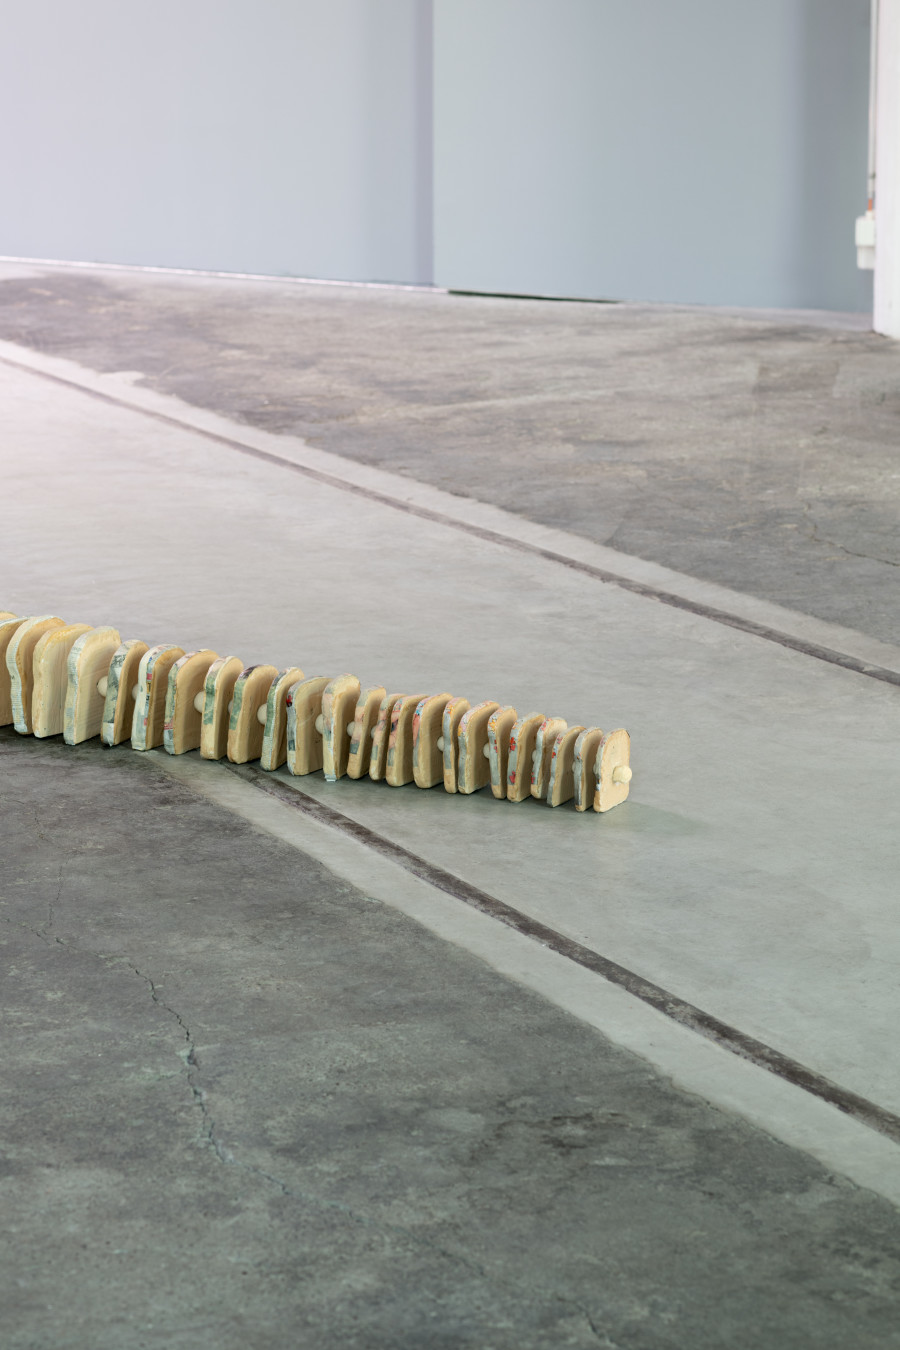 Camille Henrot, Sweet Days of Discipline, installation views LOK by Kunstmuseum St.Gallen Photo: Sebastian Stadler © Camille Henrot, Adagp, Paris, 2023 Supported by Mennour, Paris and Hauser & Wirth